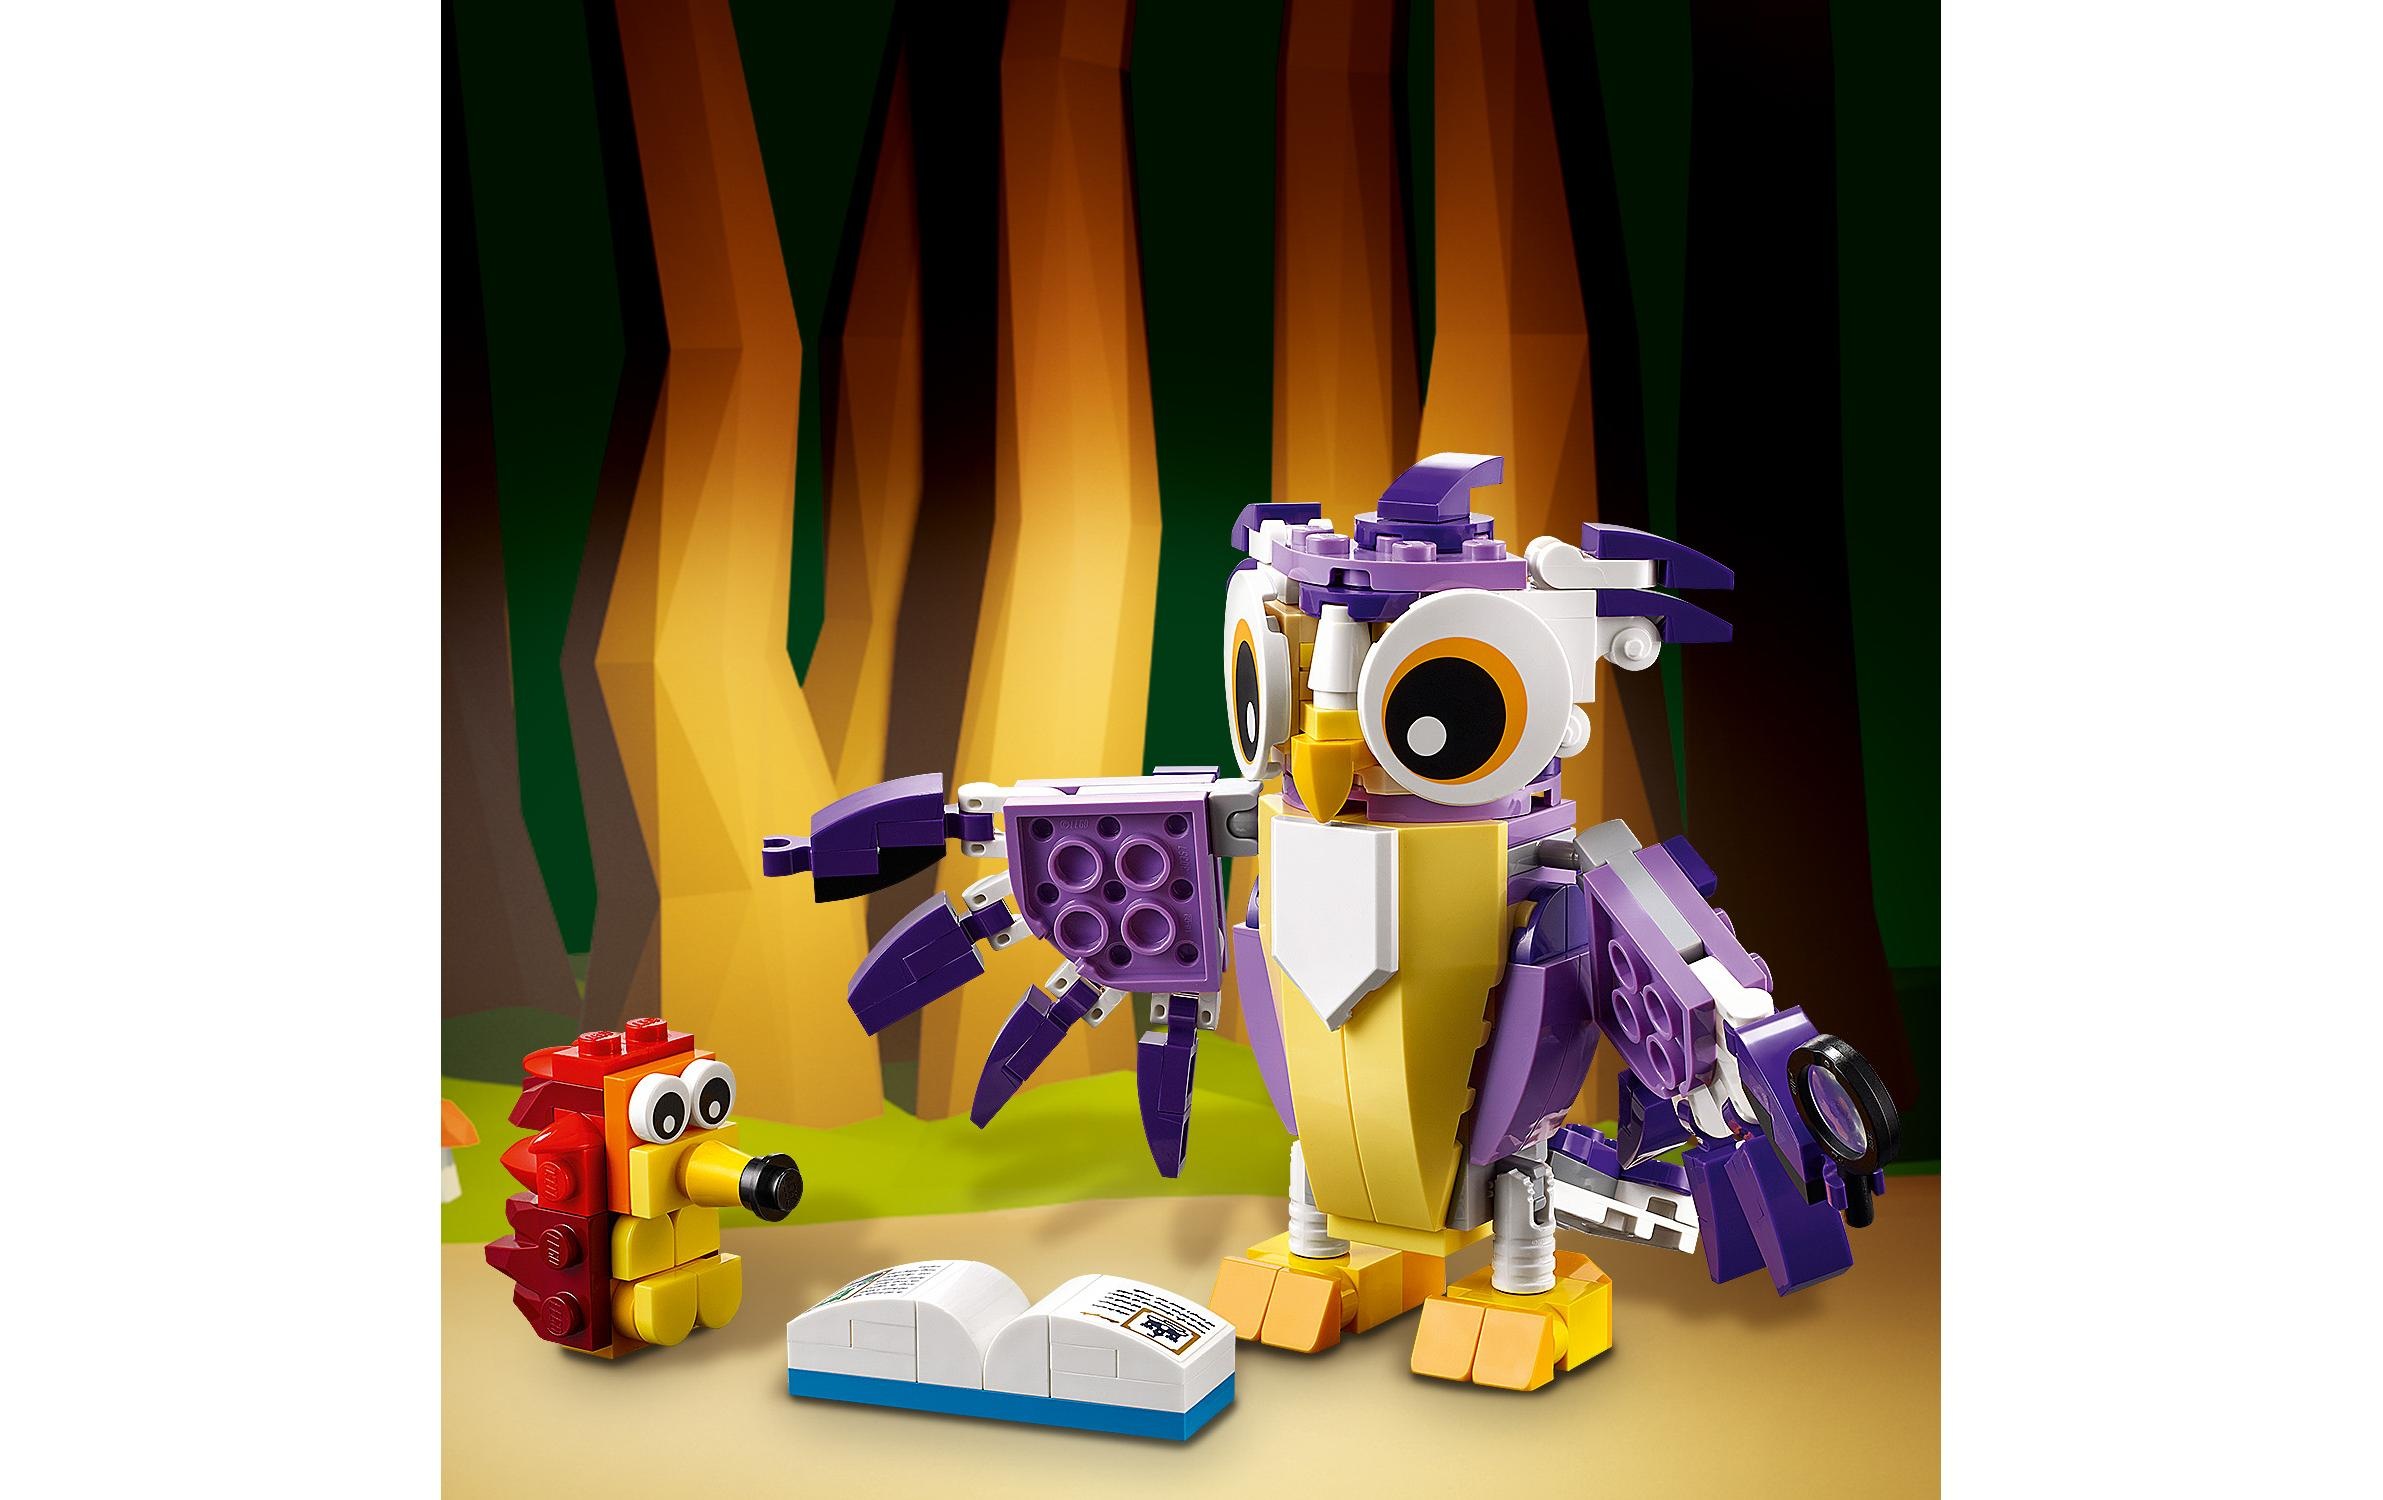 LEGO® Spielbausteine »LEGO Creator Wald-Fabelwesen 31125«, (175 St.)